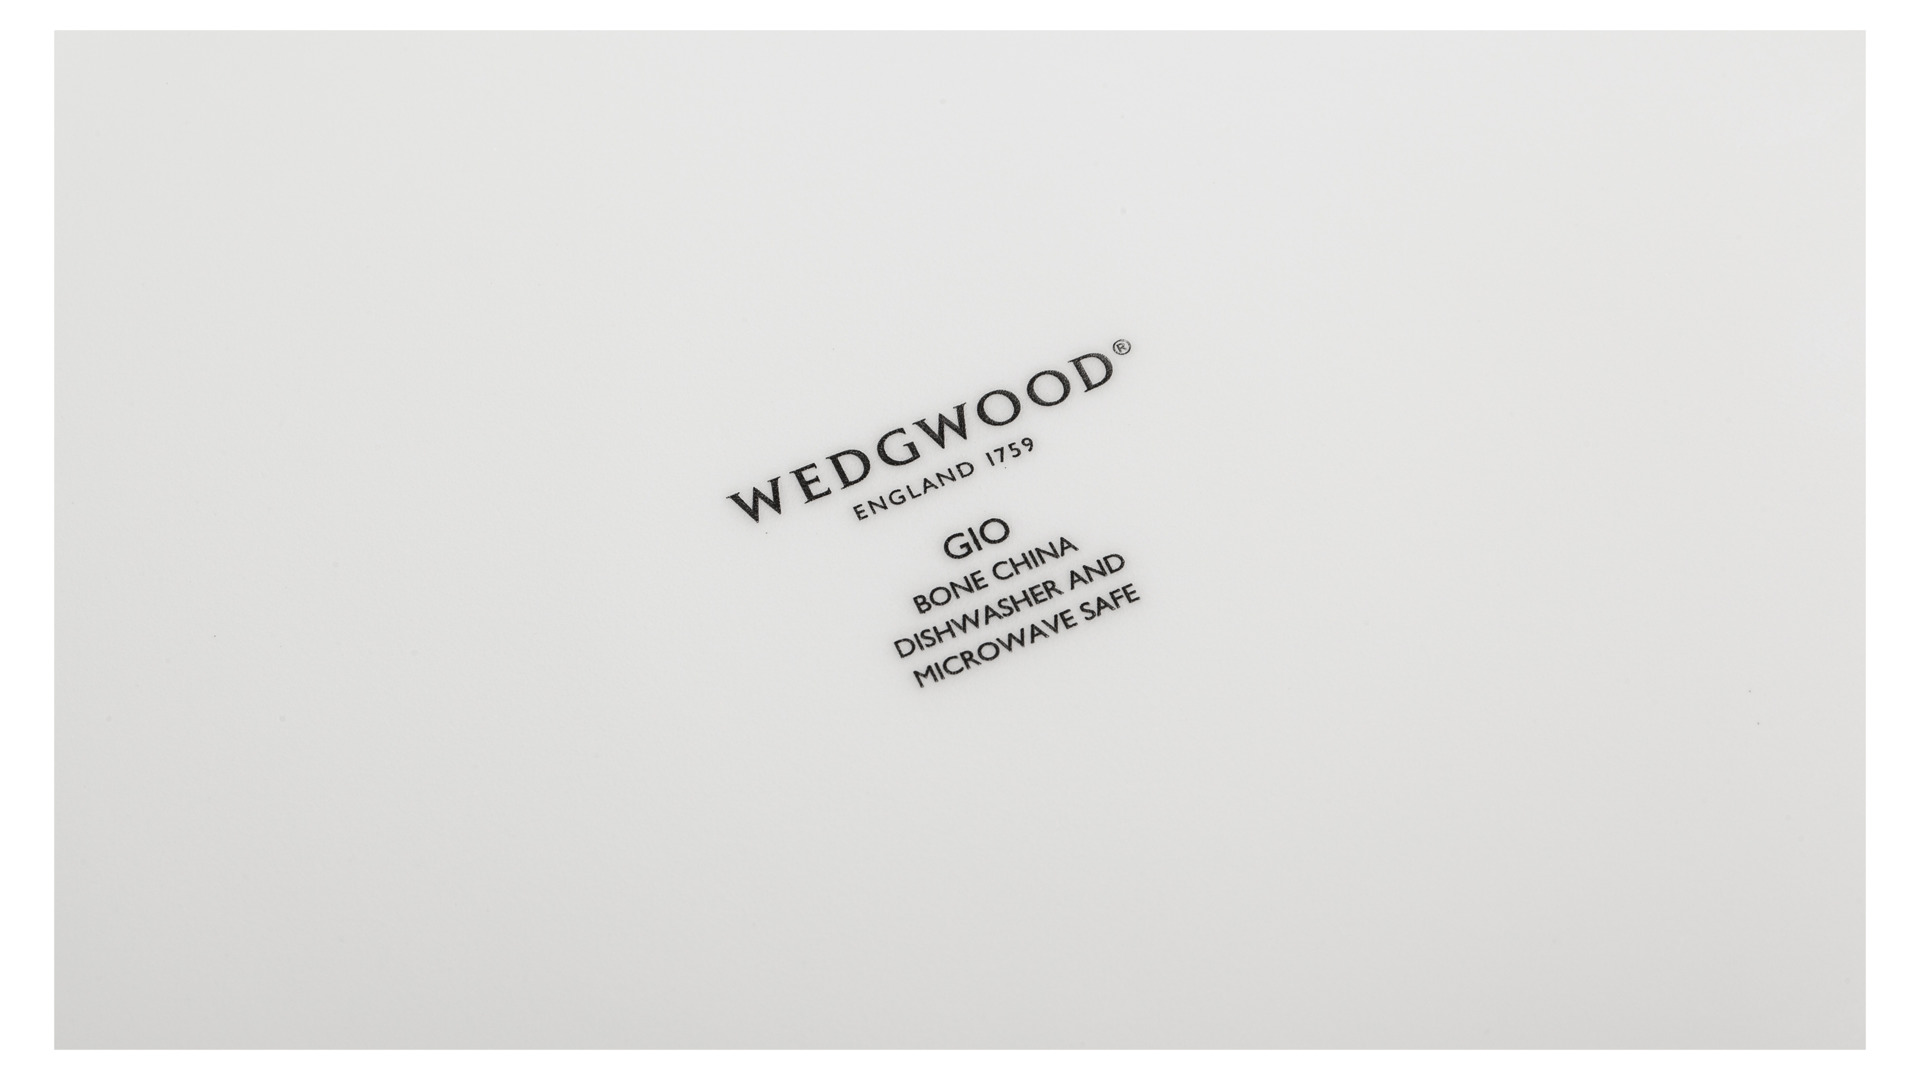 Набор тарелок обеденных Wedgwood Джио 28 см, 6  шт, фарфор